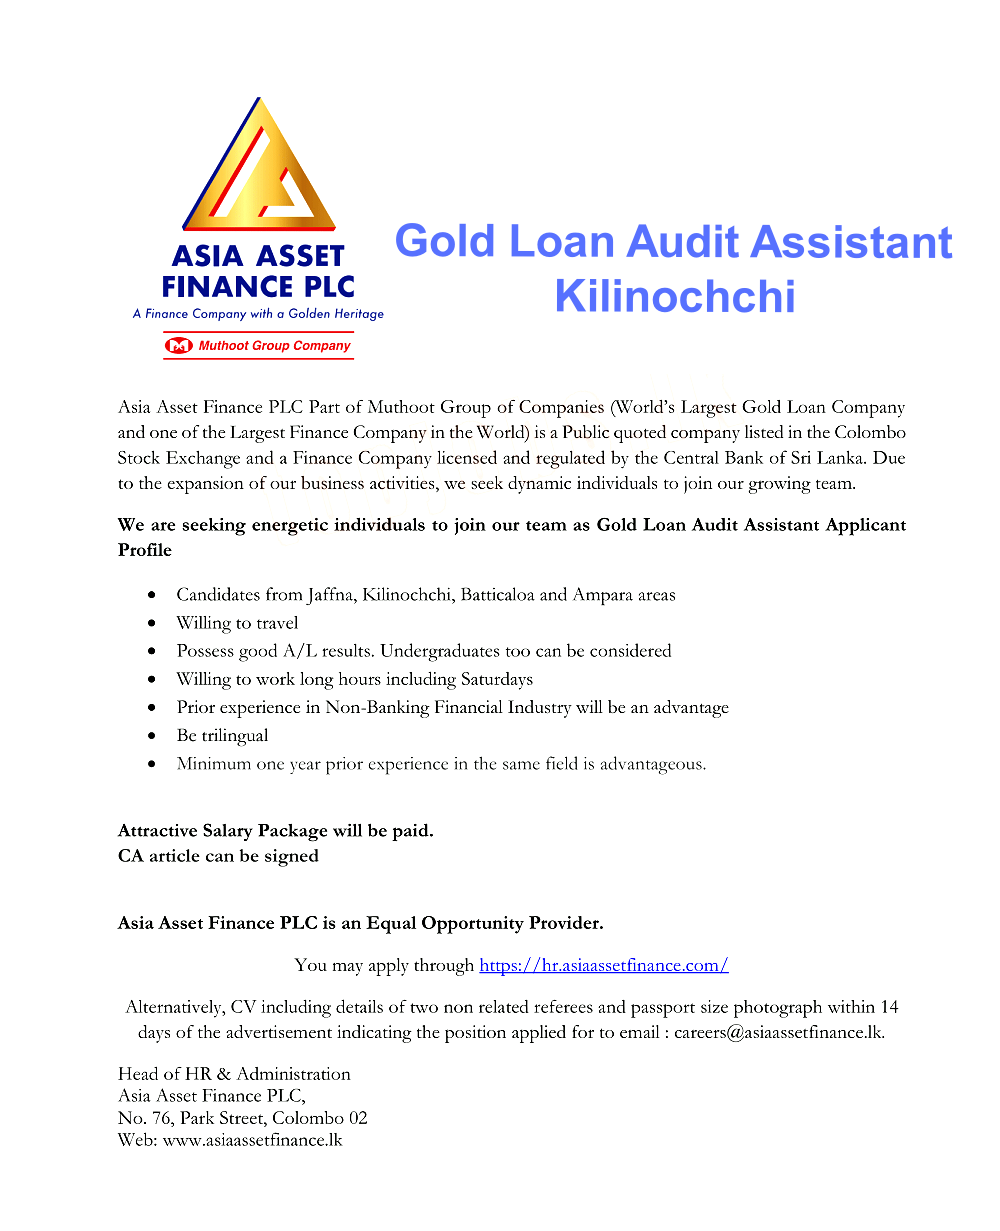 Gold Loan Audit Assistant Job Vacancy - Kilinochchi Asia Asset Finance Jobs Vacancies Details